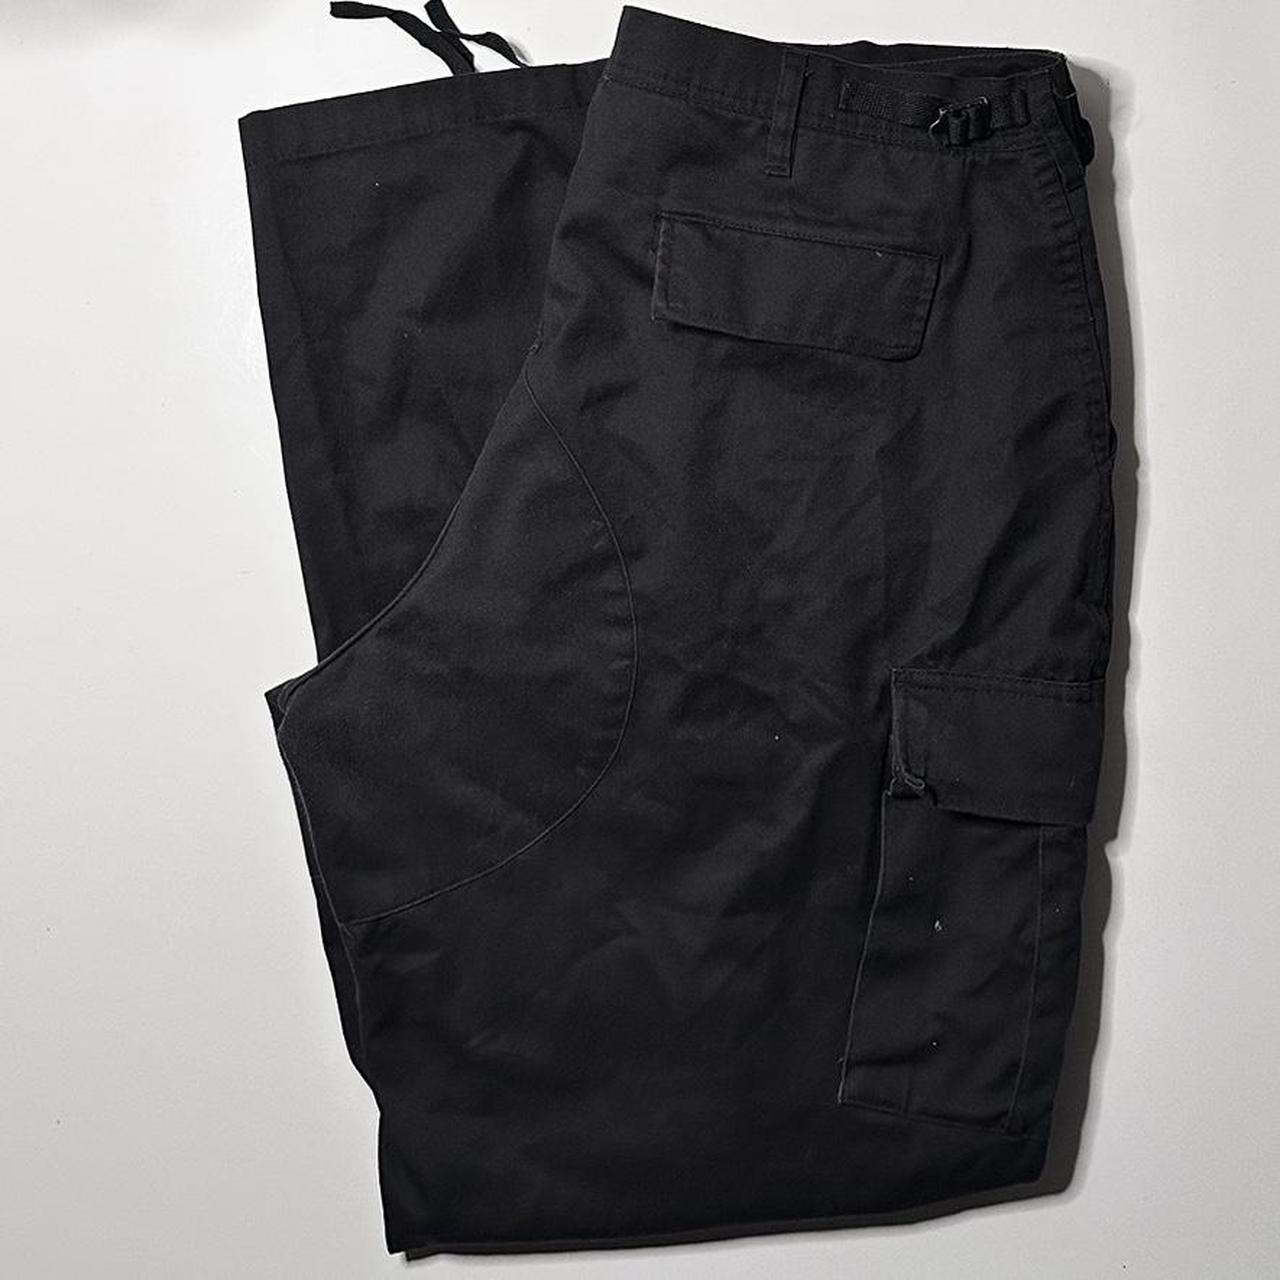 Military Baggy Adjustable Cargo Pants Black 36x33.5... - Depop